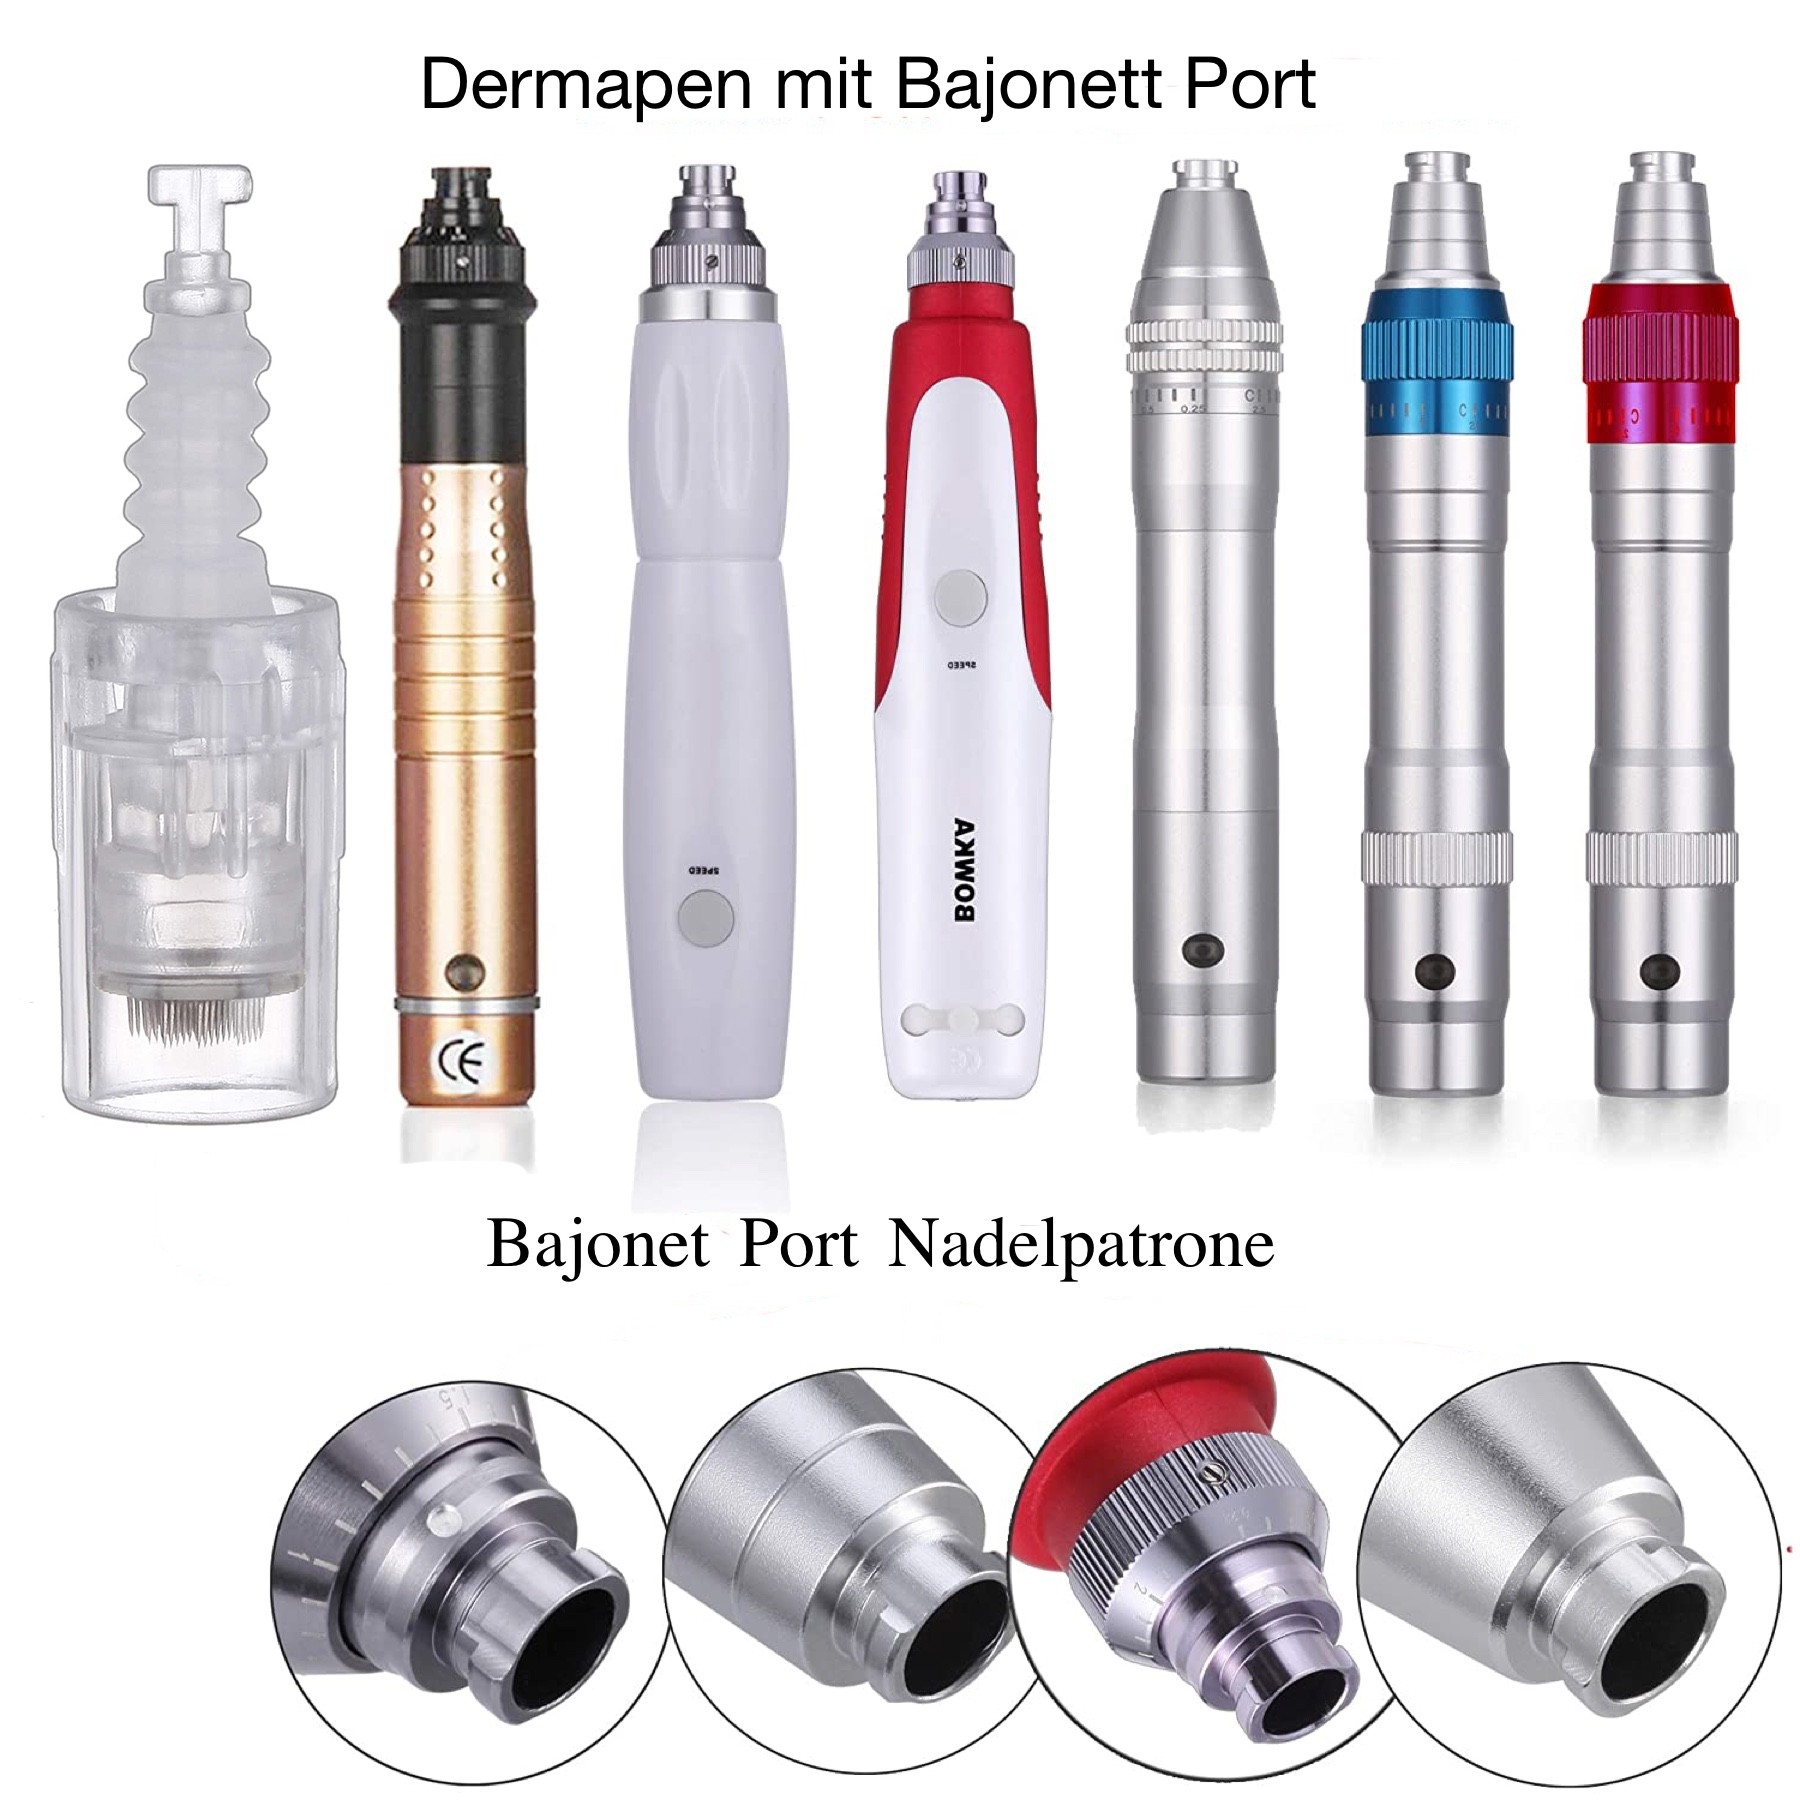 Nadelpatronen Bajonett Ersatz Nadelpatronen für Dermapen Geräte mit Bajonett Port